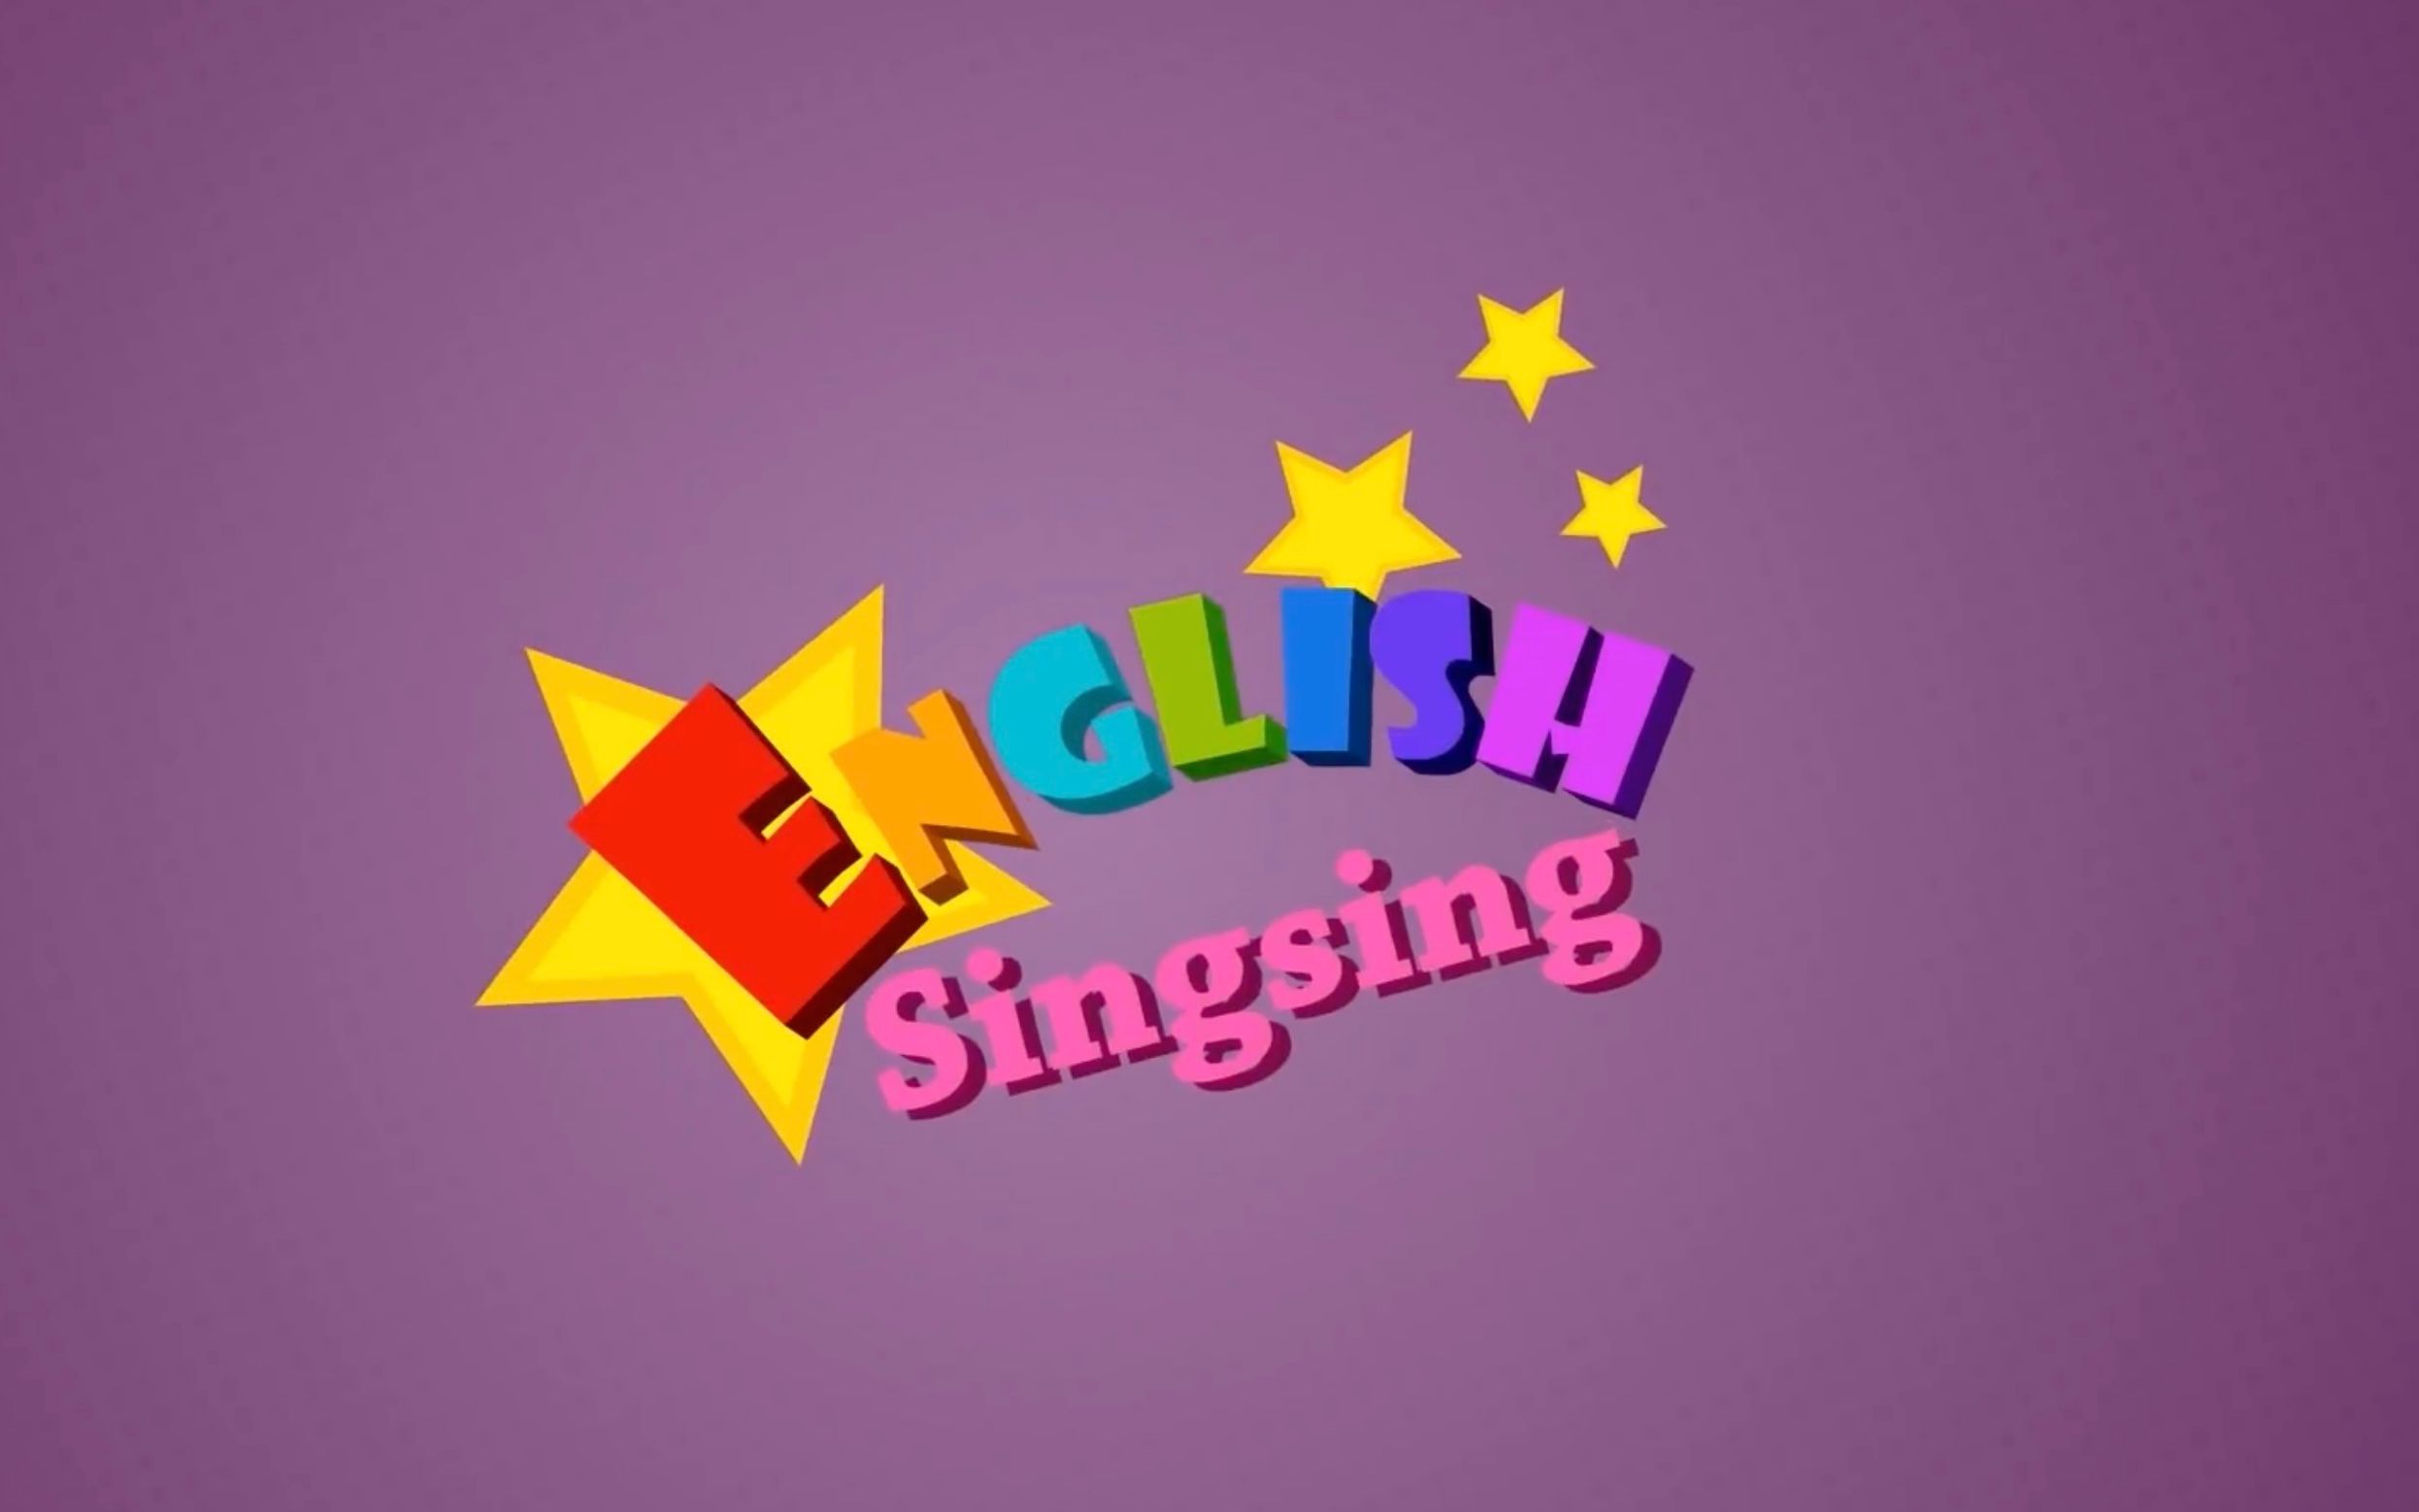 English SINGSING. English SINGSING clothes. Channel английский